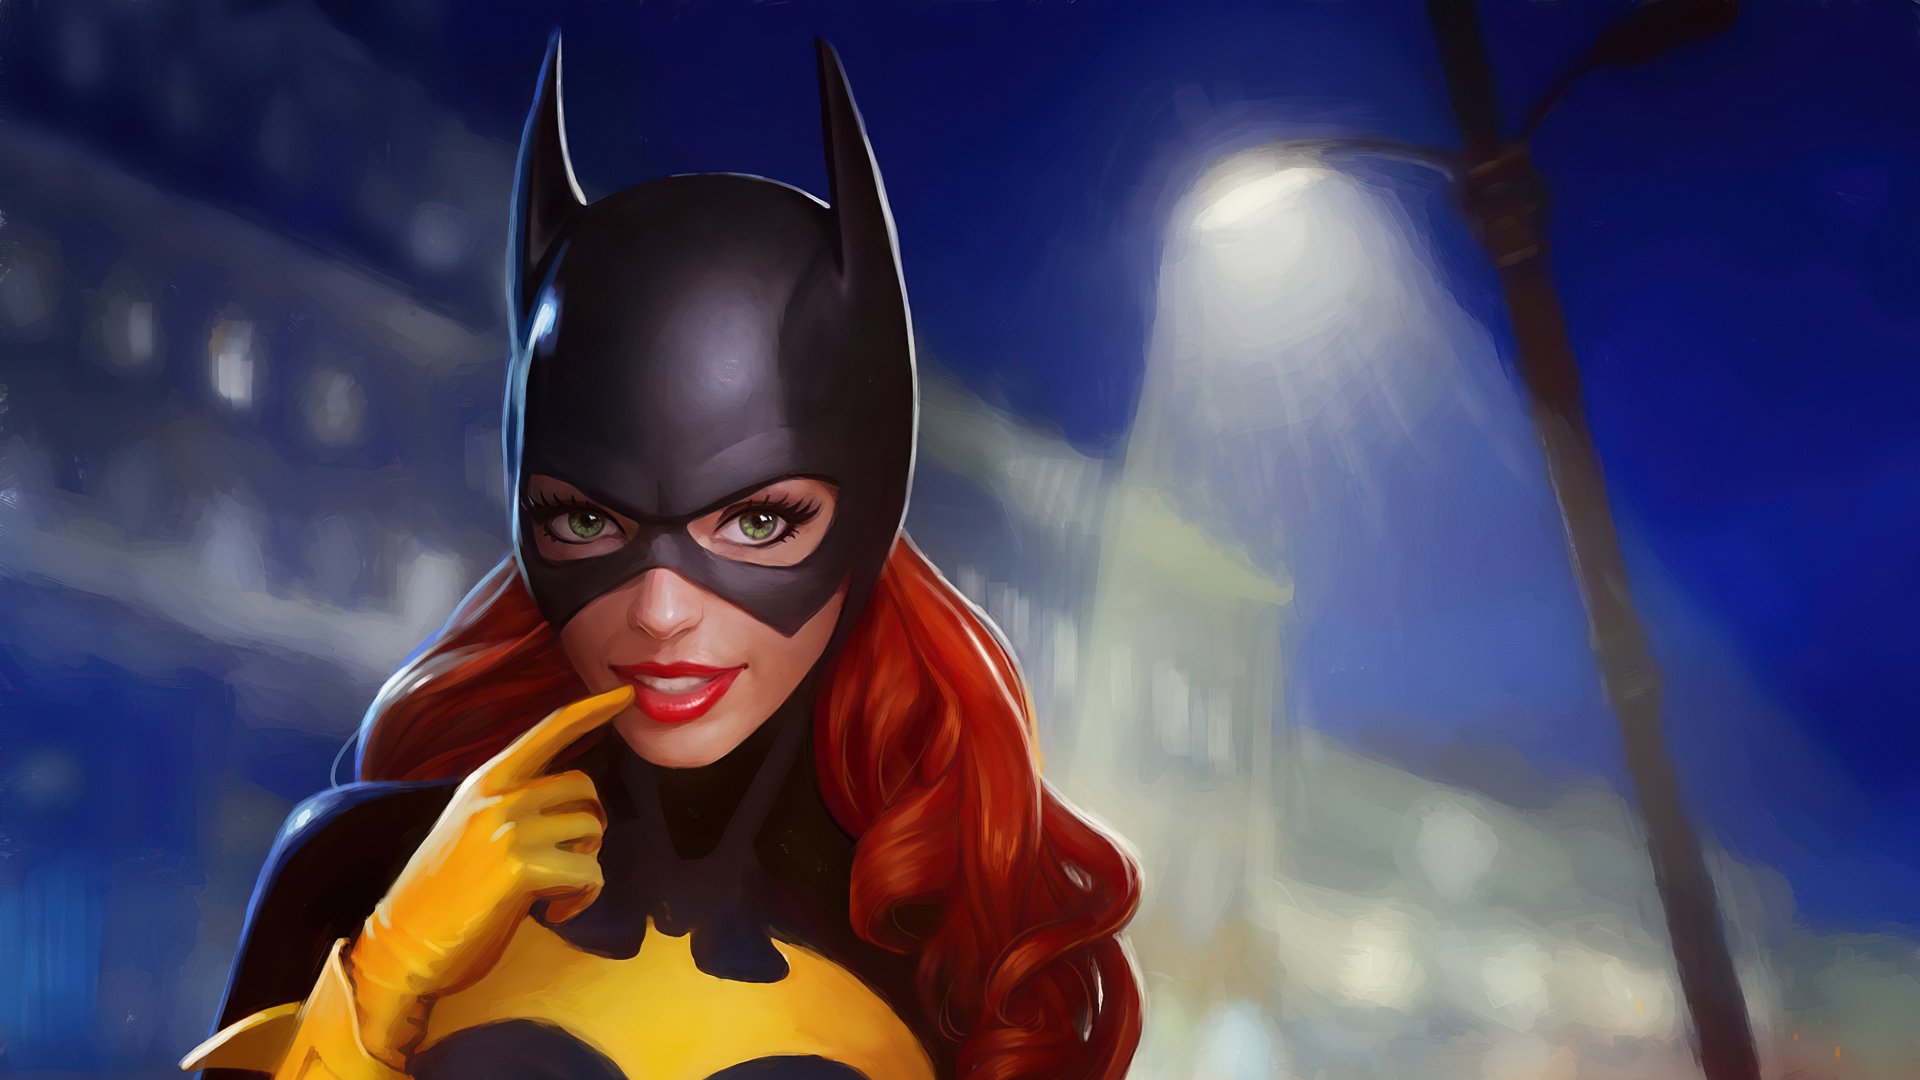 Batgirl HD Wallpaper Background Image 3714x2089.